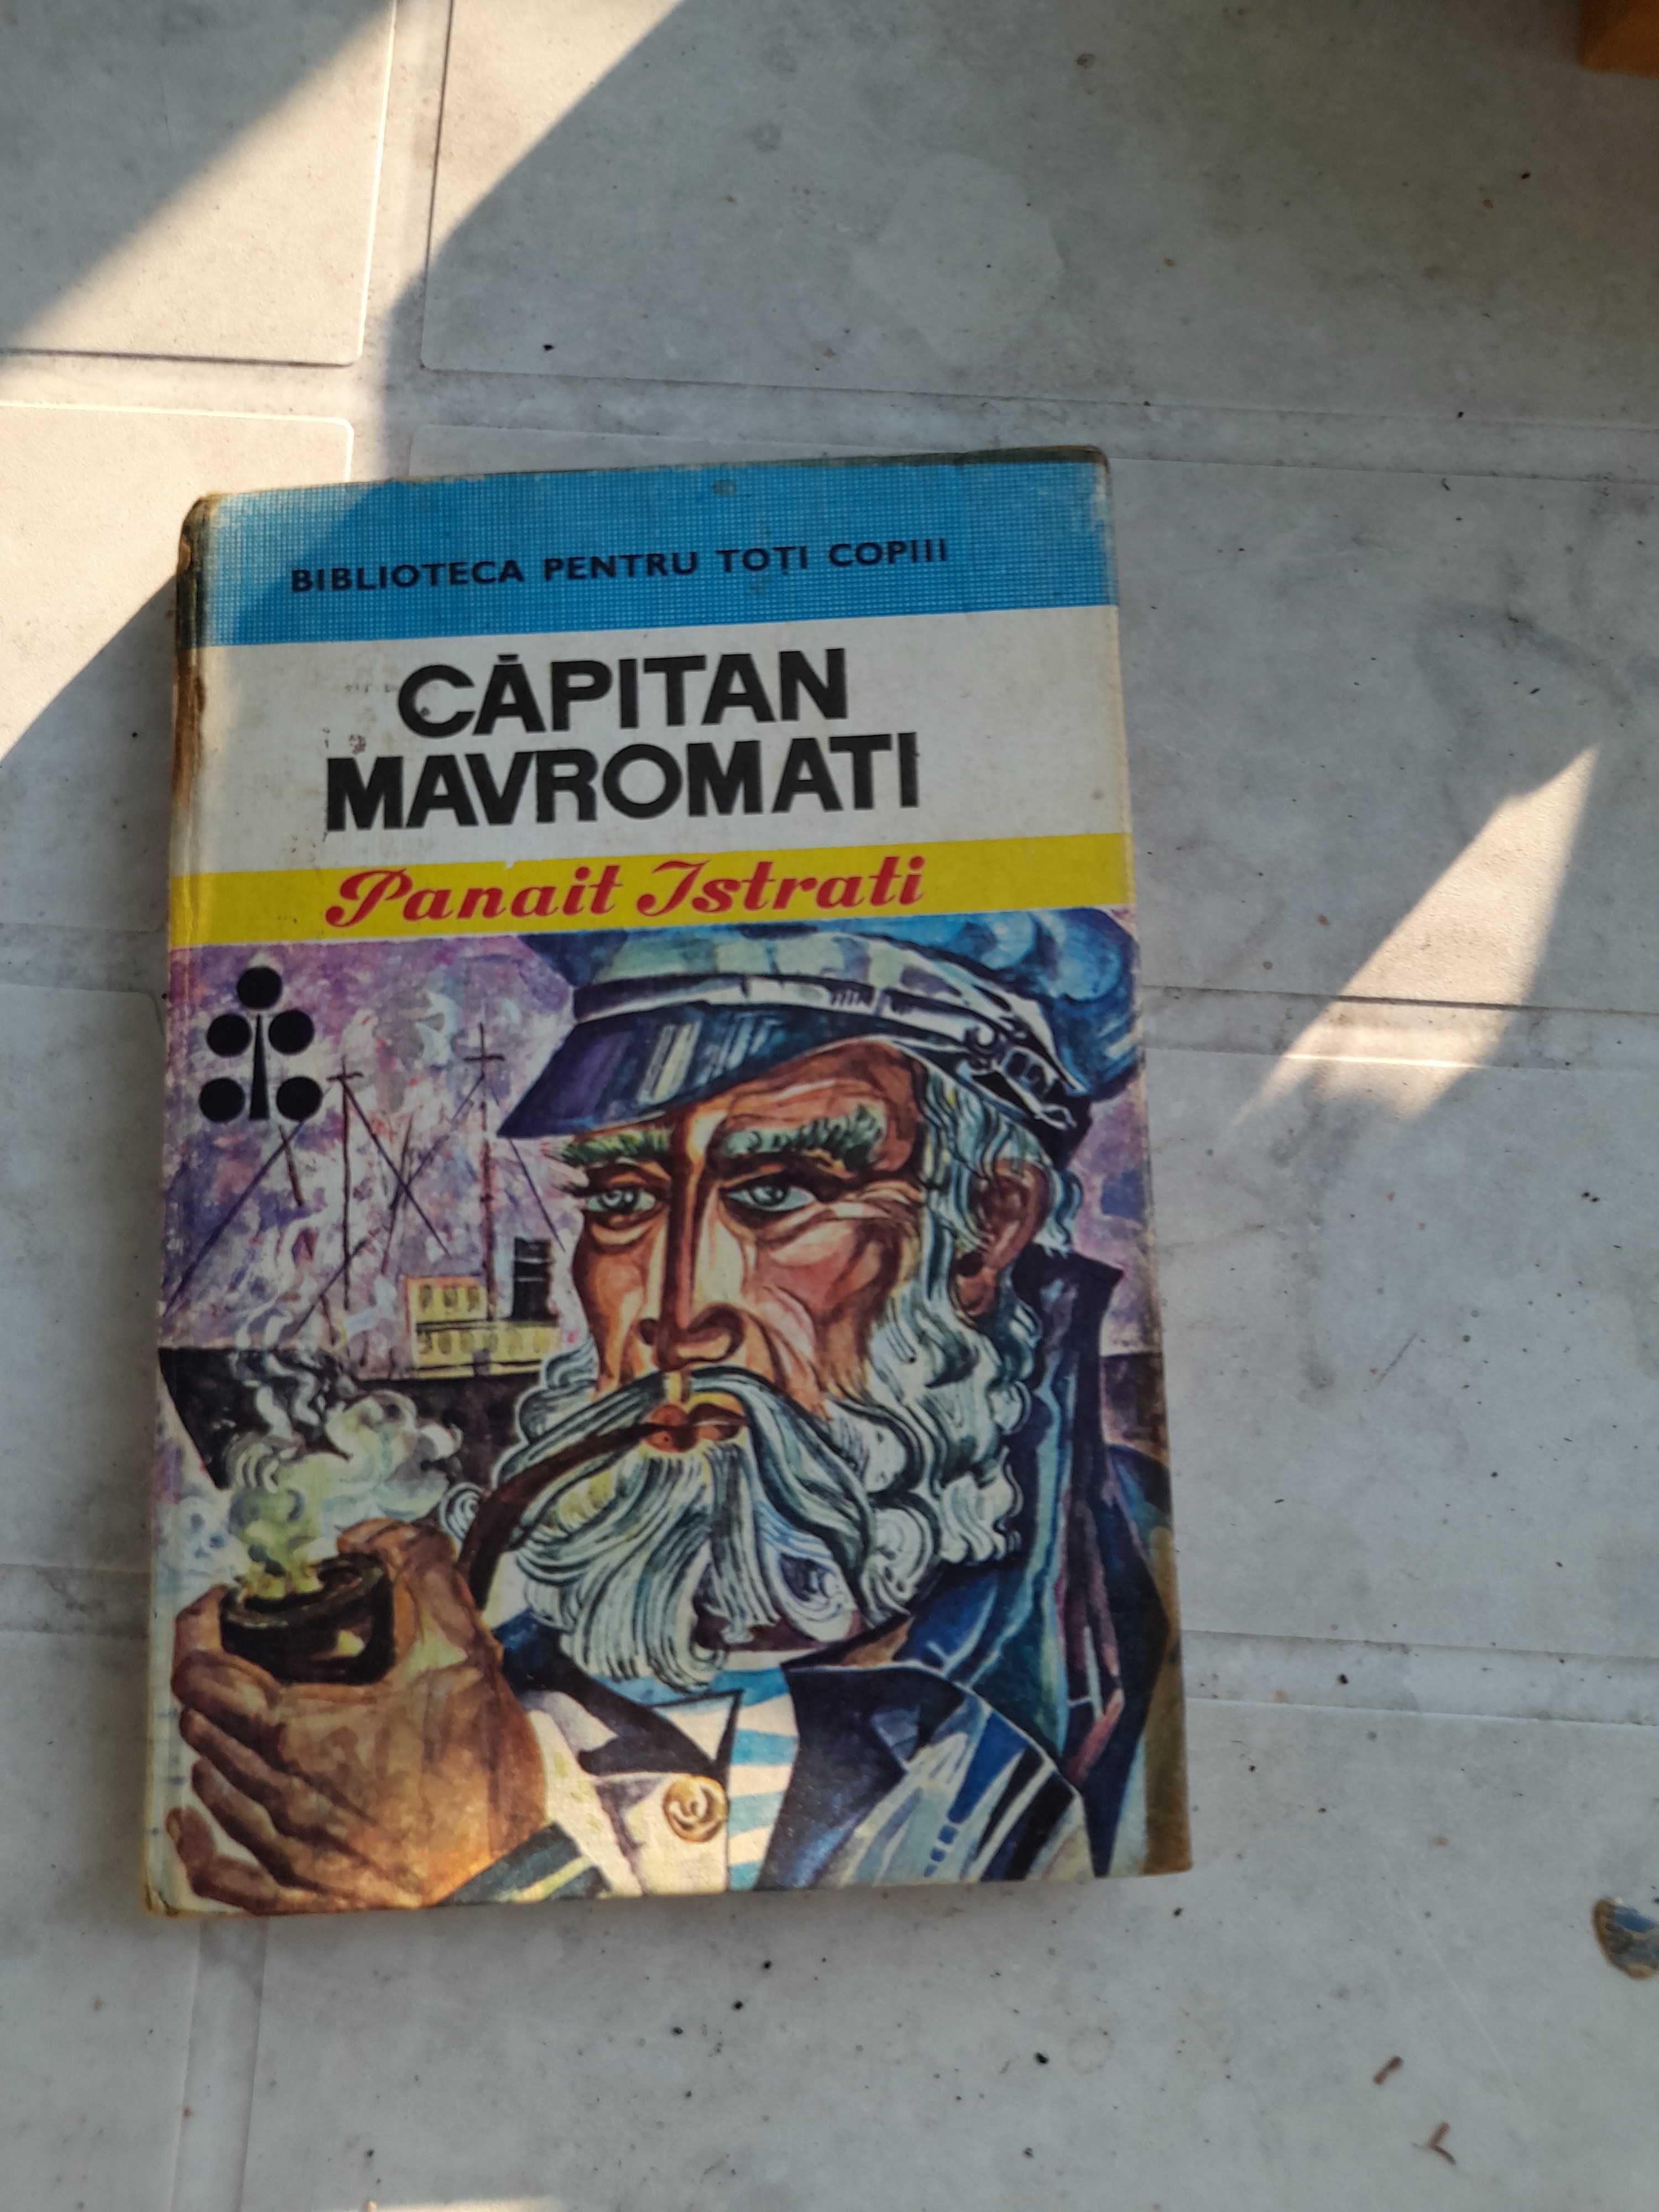 Capitan Mavromati de Panait Istrati